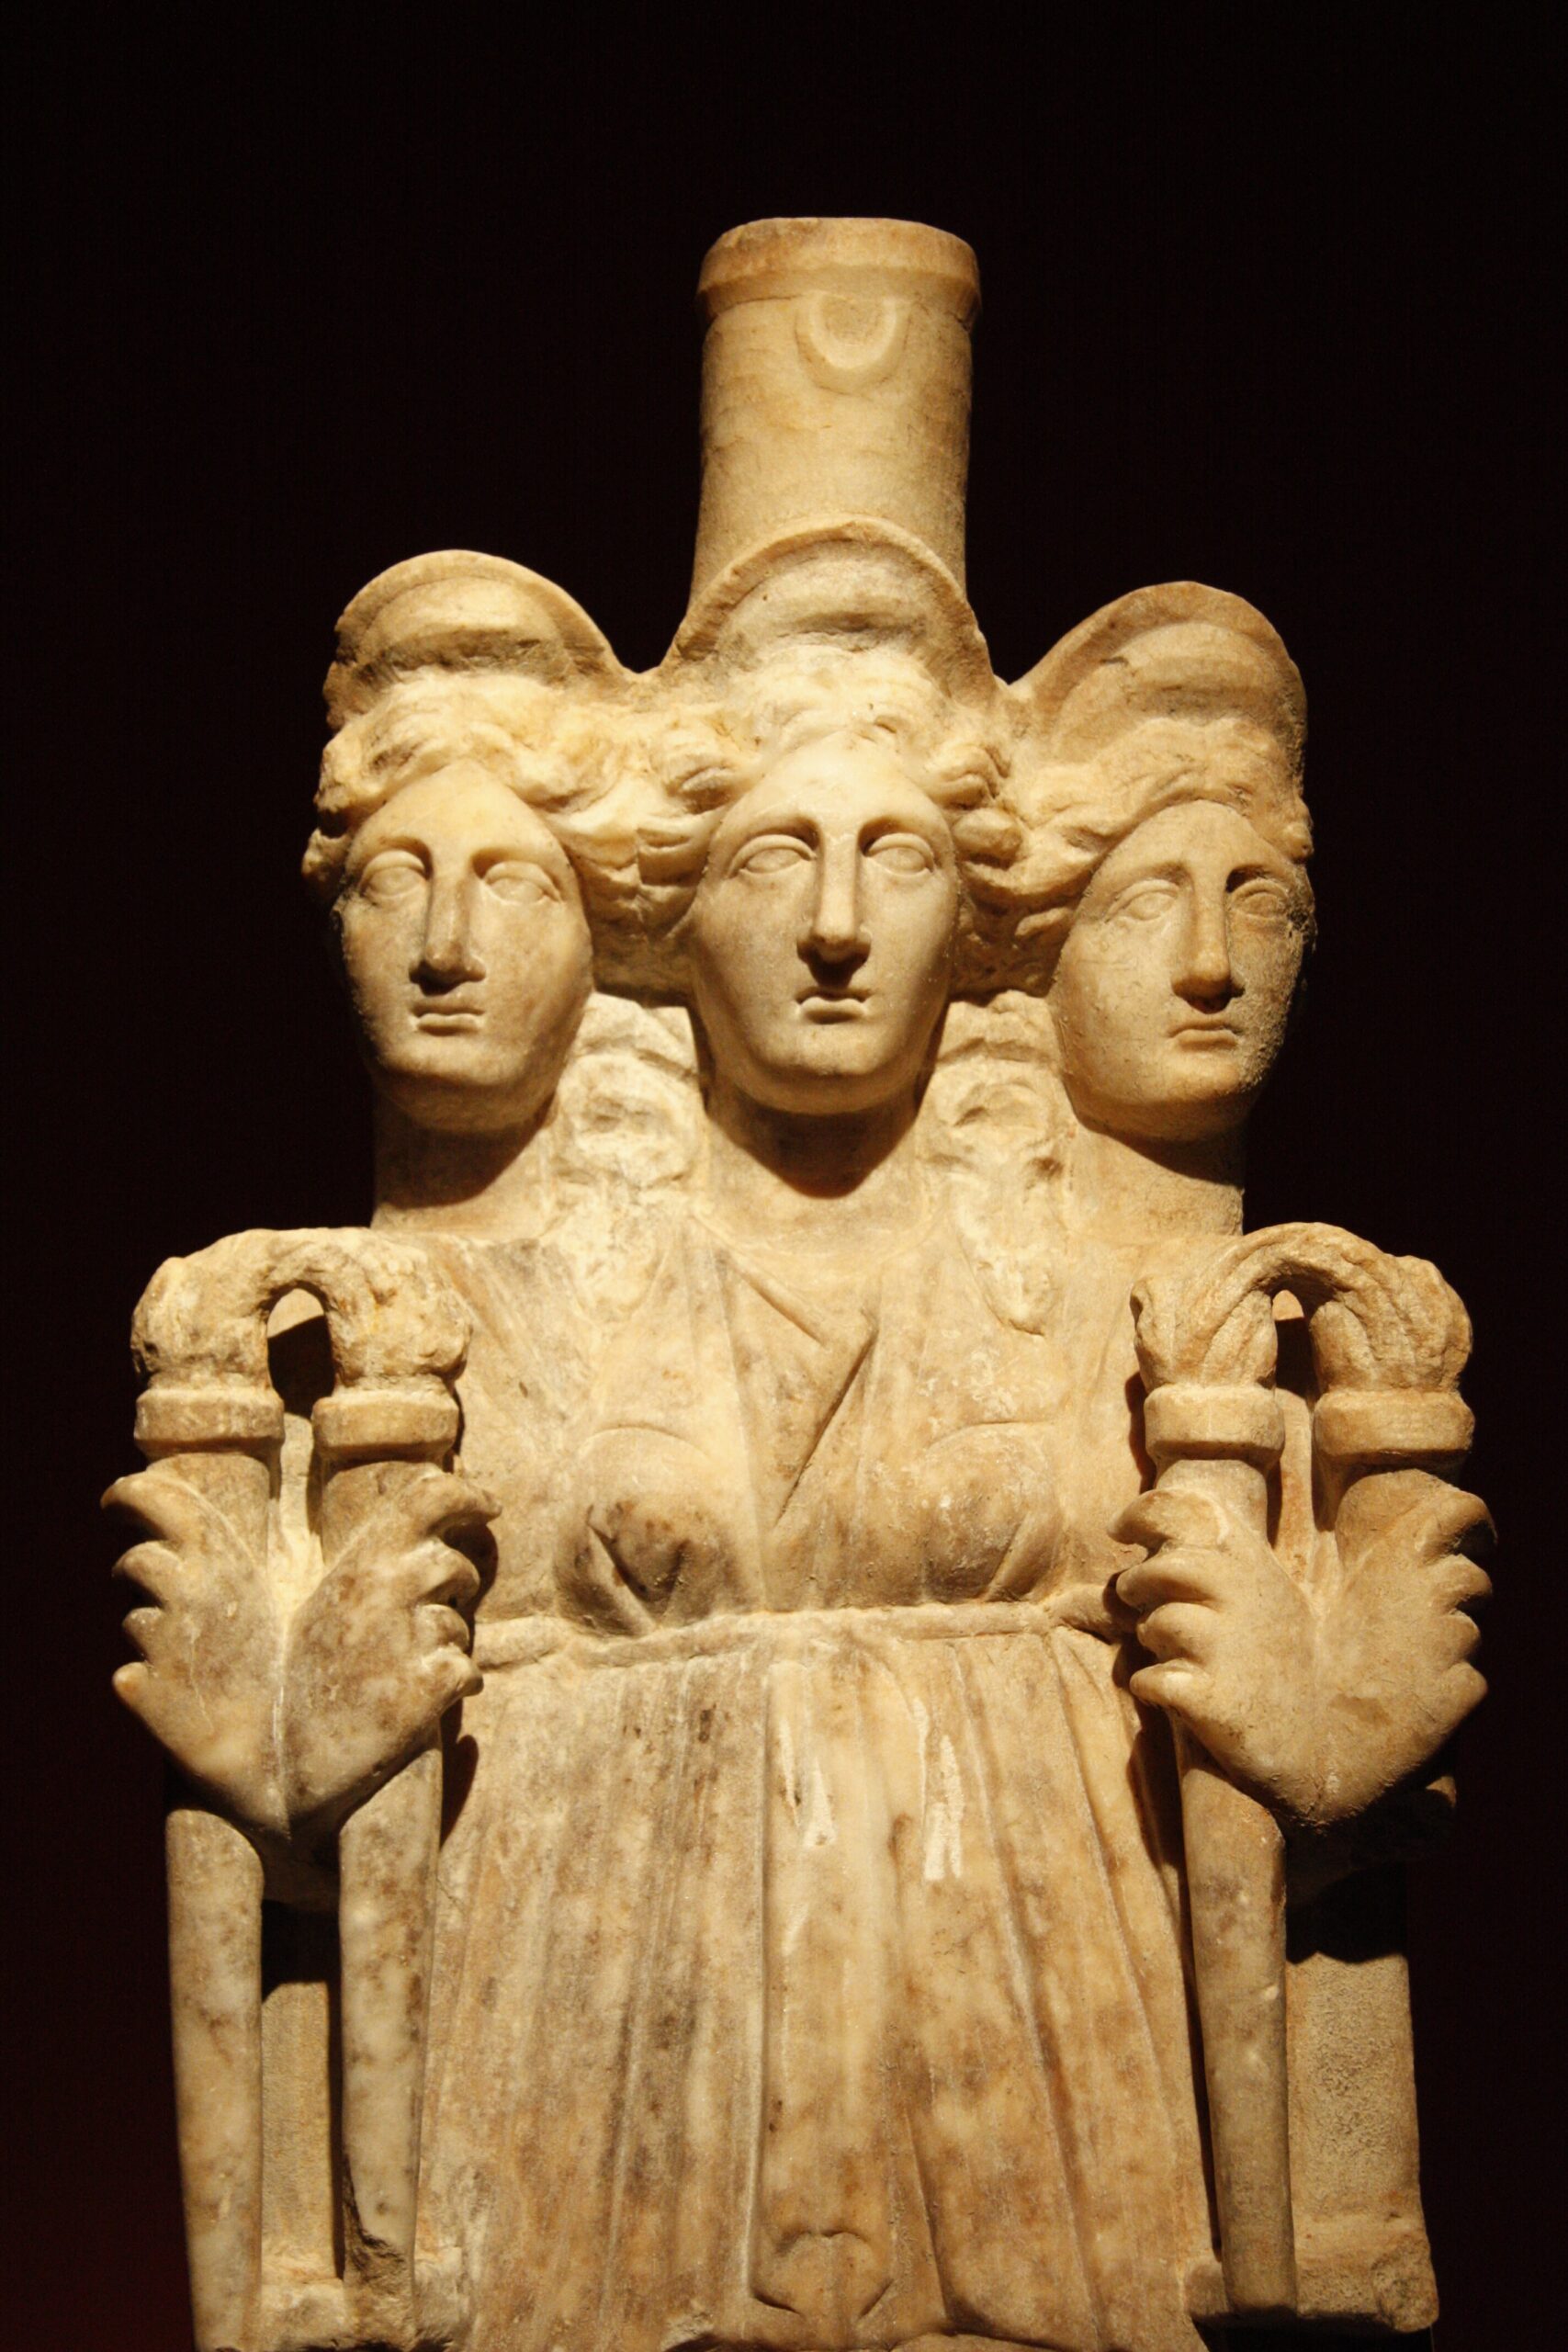 Escultura antigua de la diosa Hécate de March